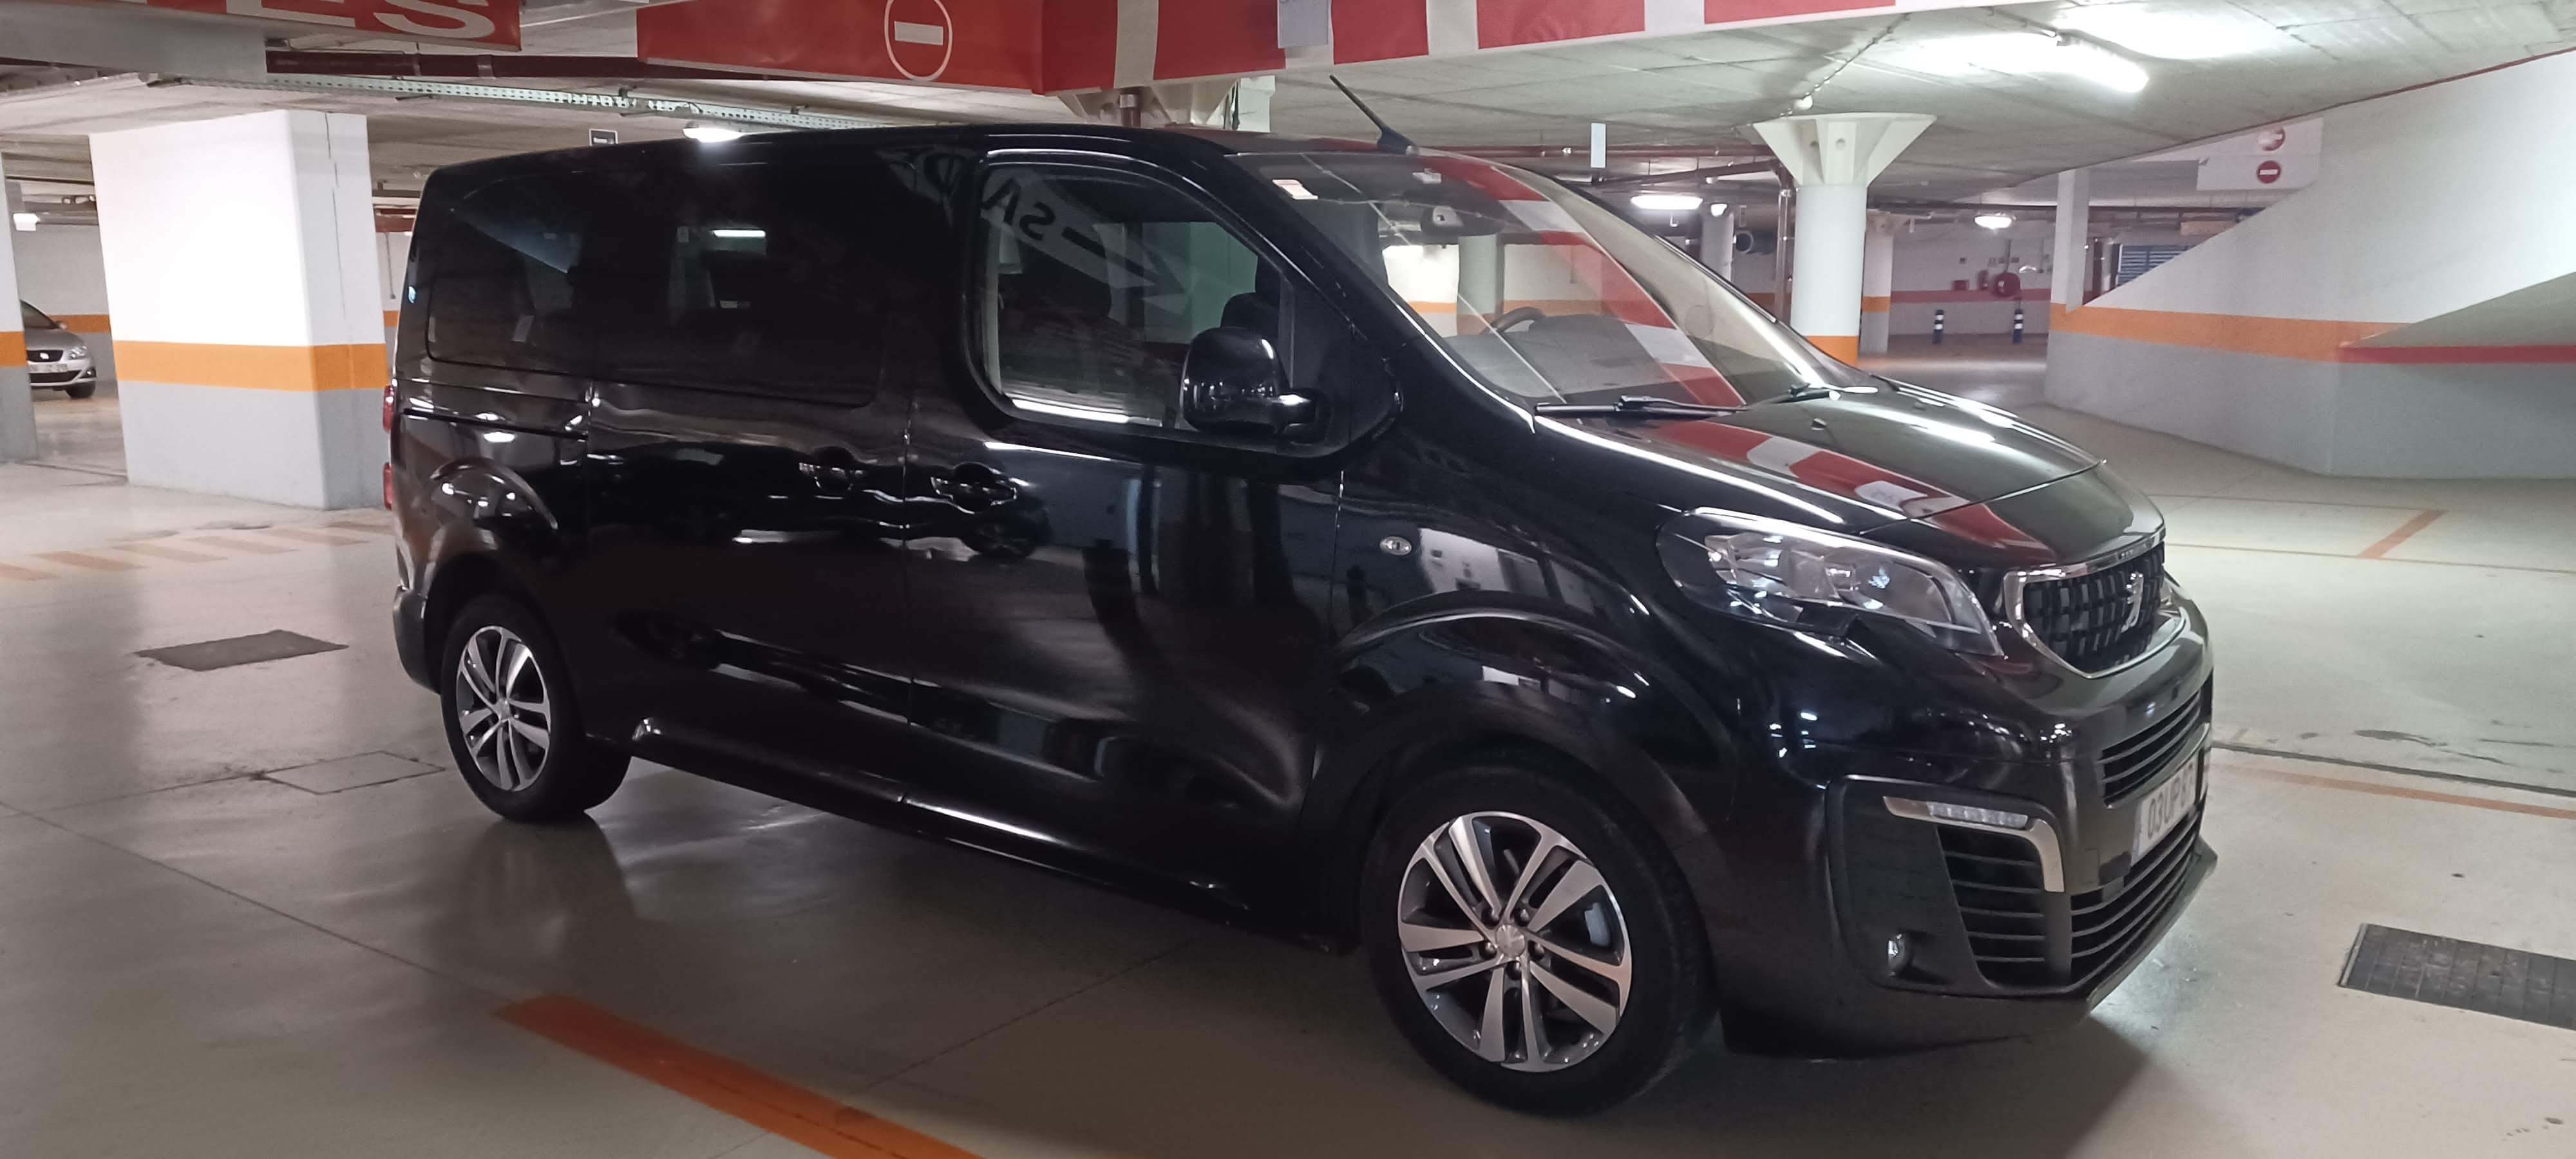 Rent a 6 seater Minivan (Peugeot  TRAVELLER 2018) from Conjugamapas Lda from Algés, Lisboa 